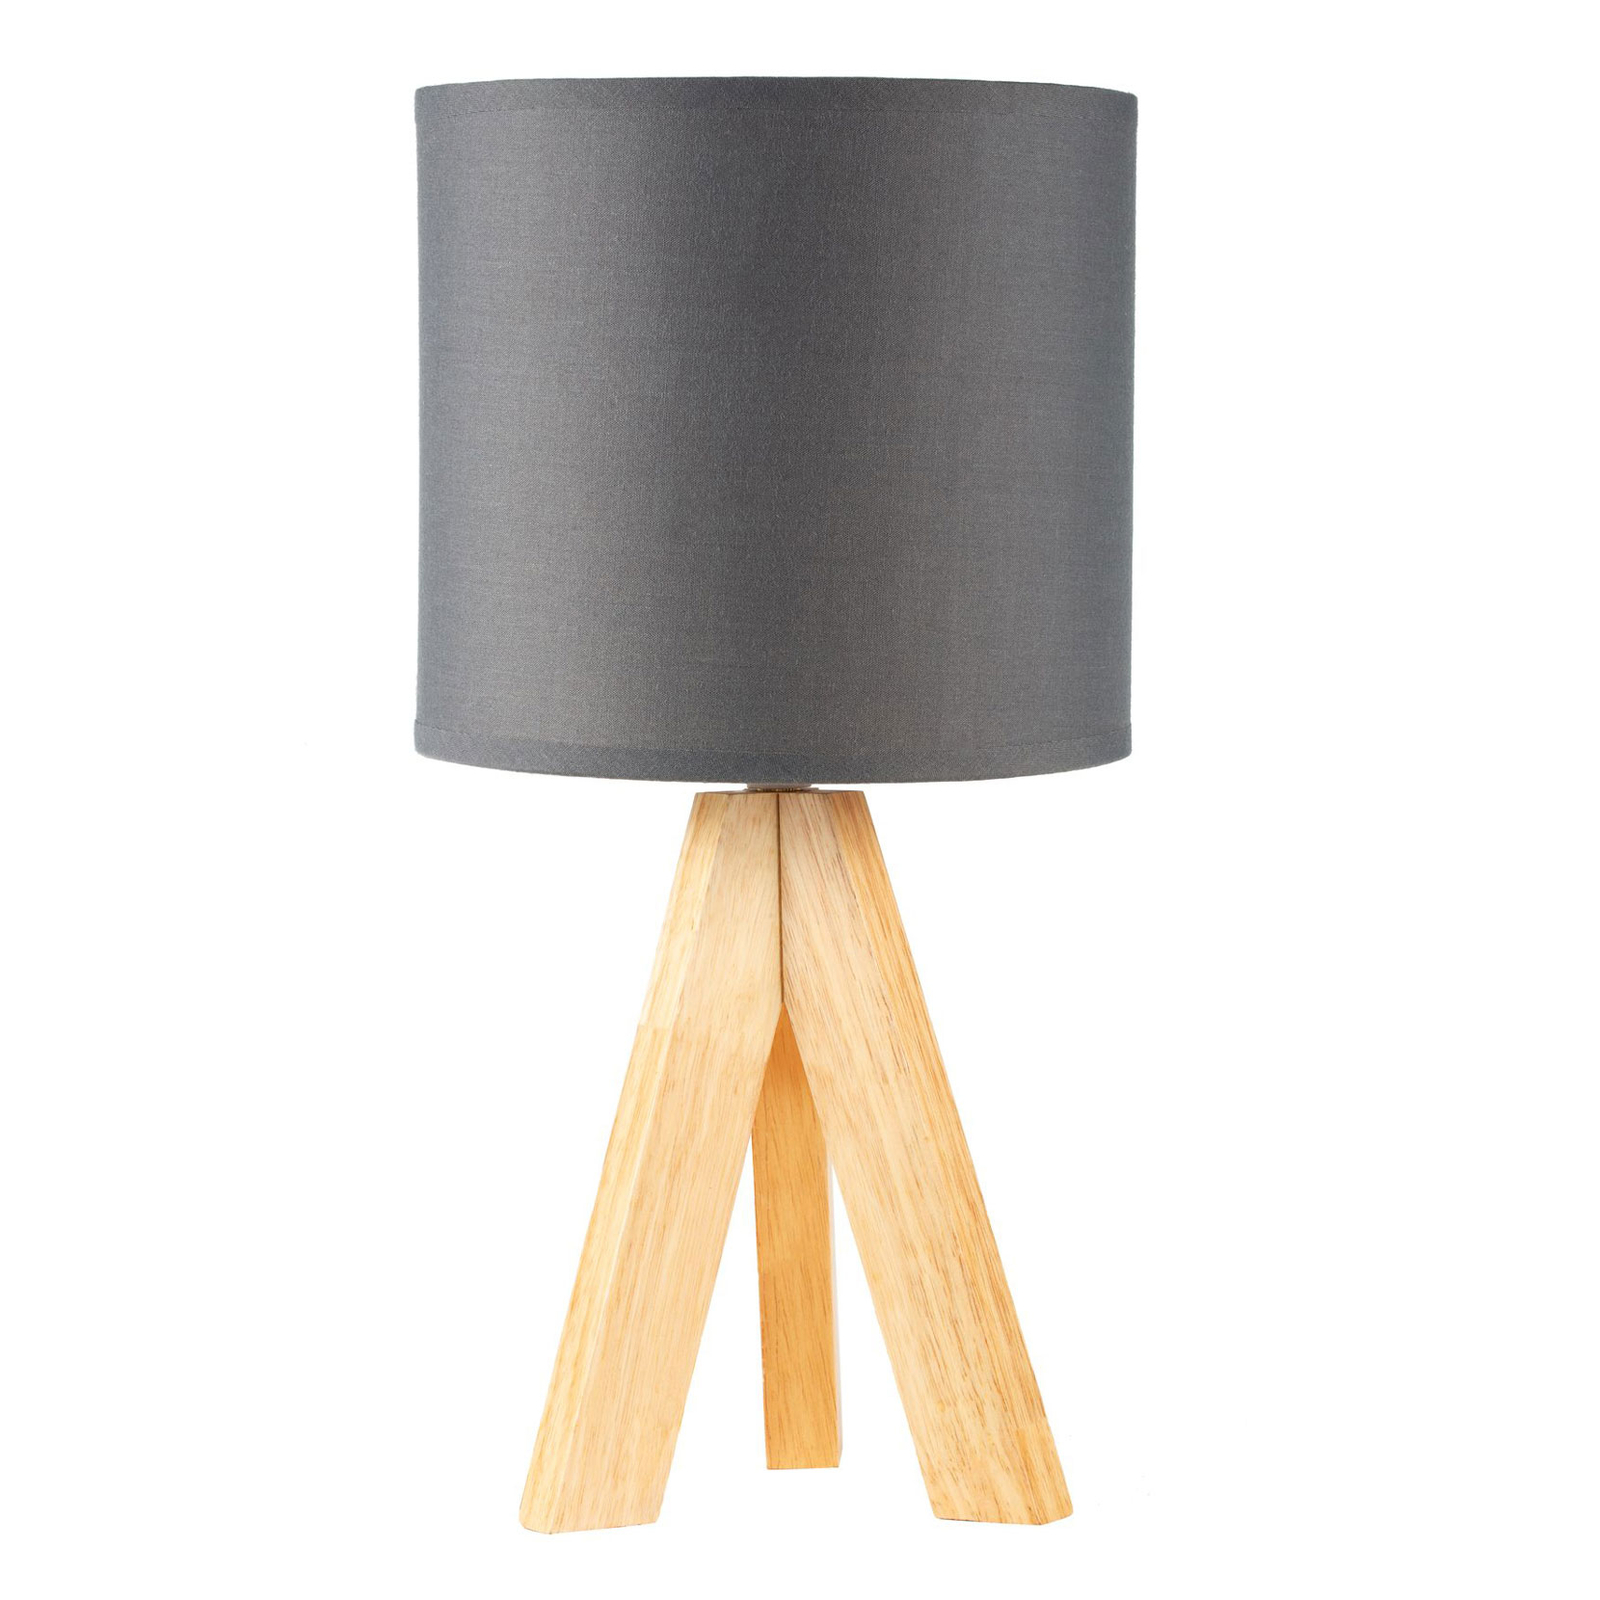 Pauleen Woody Love tafellamp met houten frame